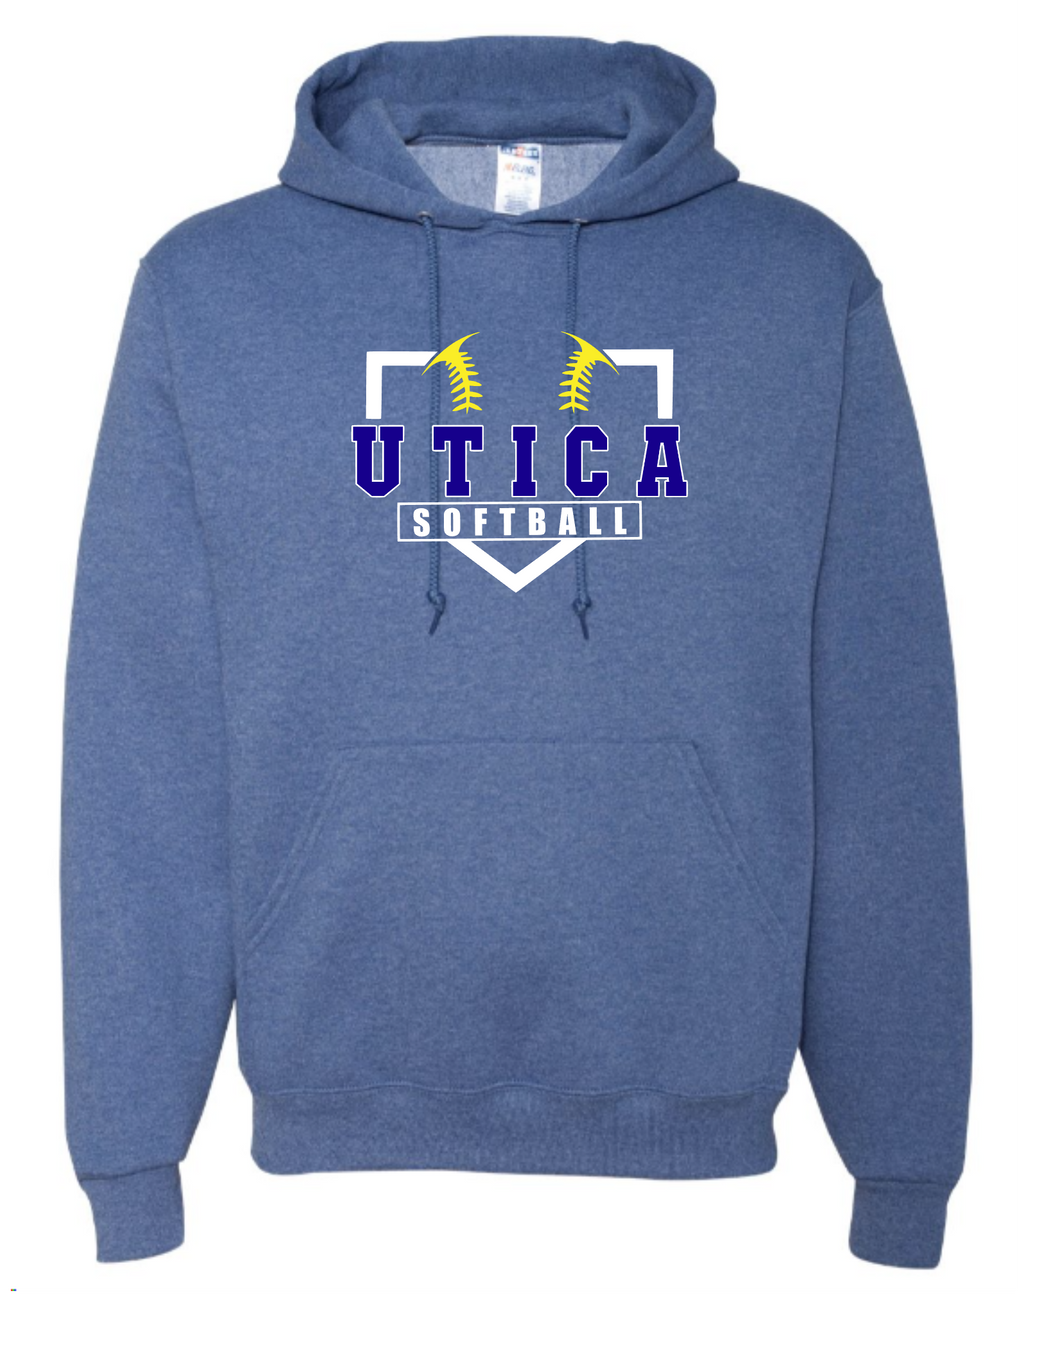 Utica softball hoodie